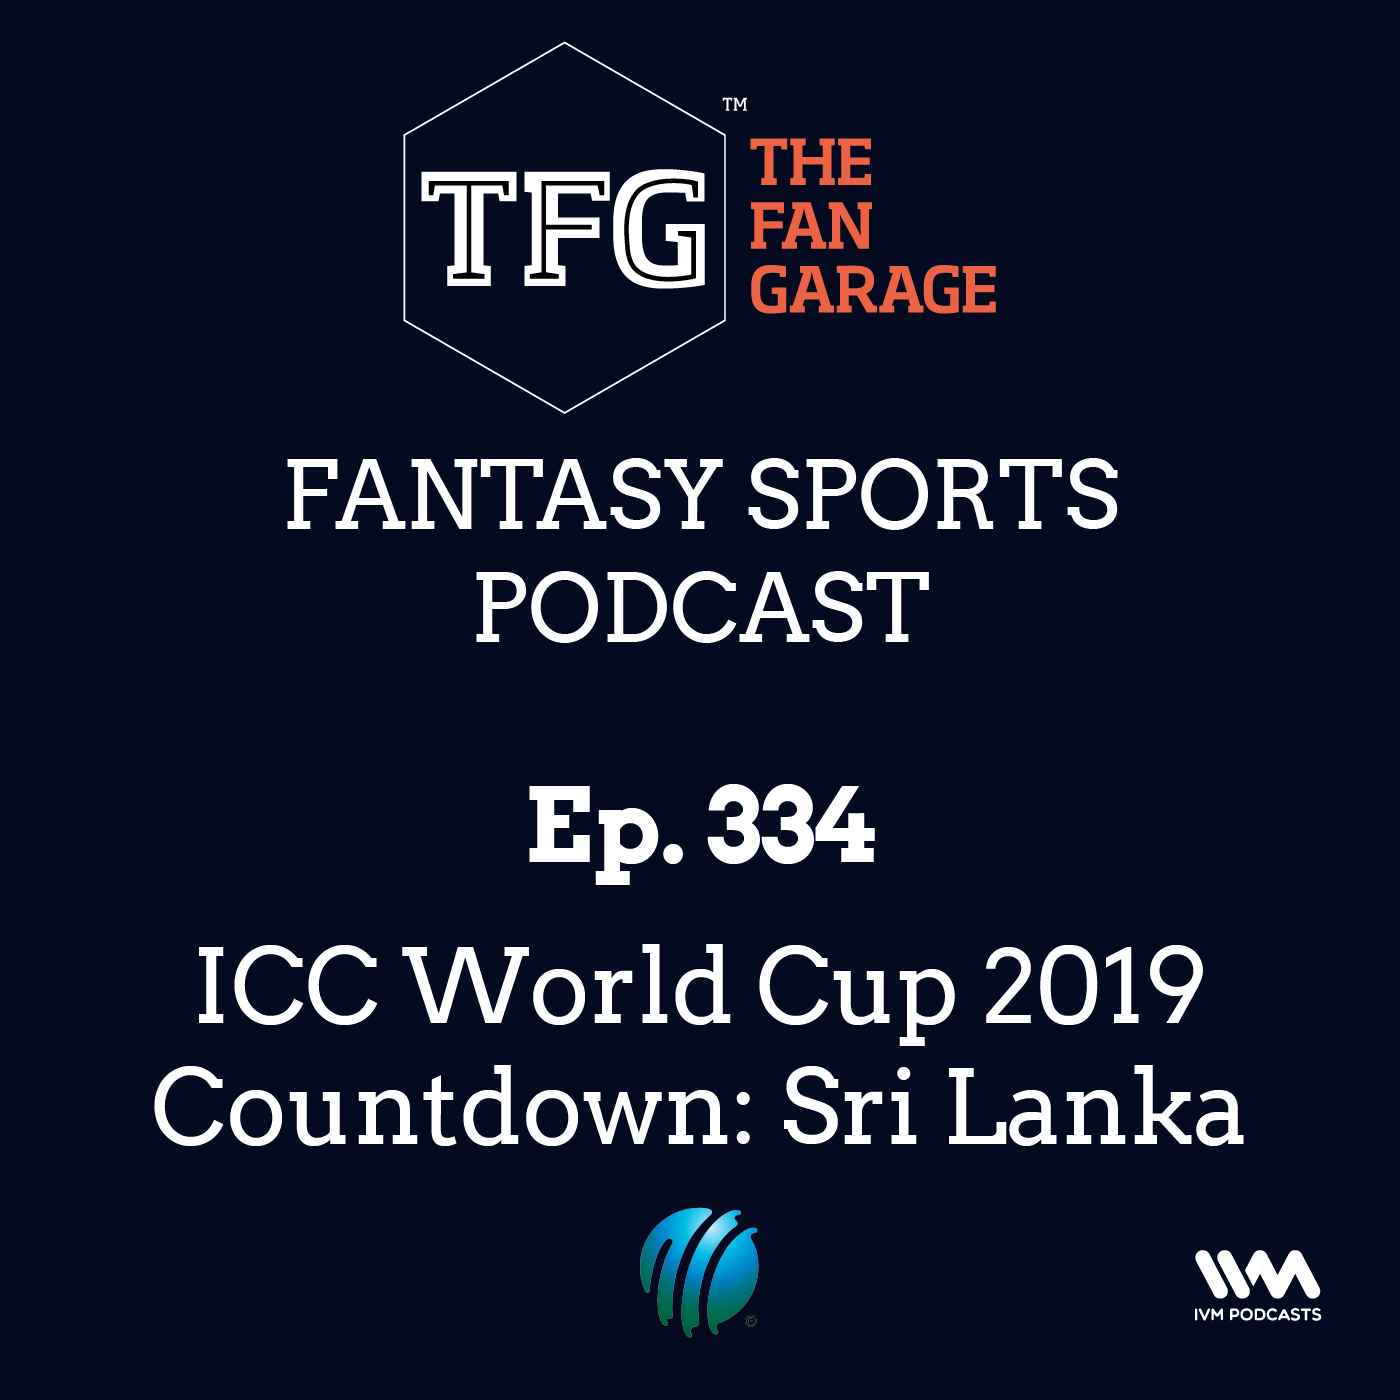 TFG Fantasy Sports Podcast Ep. 334: ICC World Cup 2019 Countdown: Sri Lanka